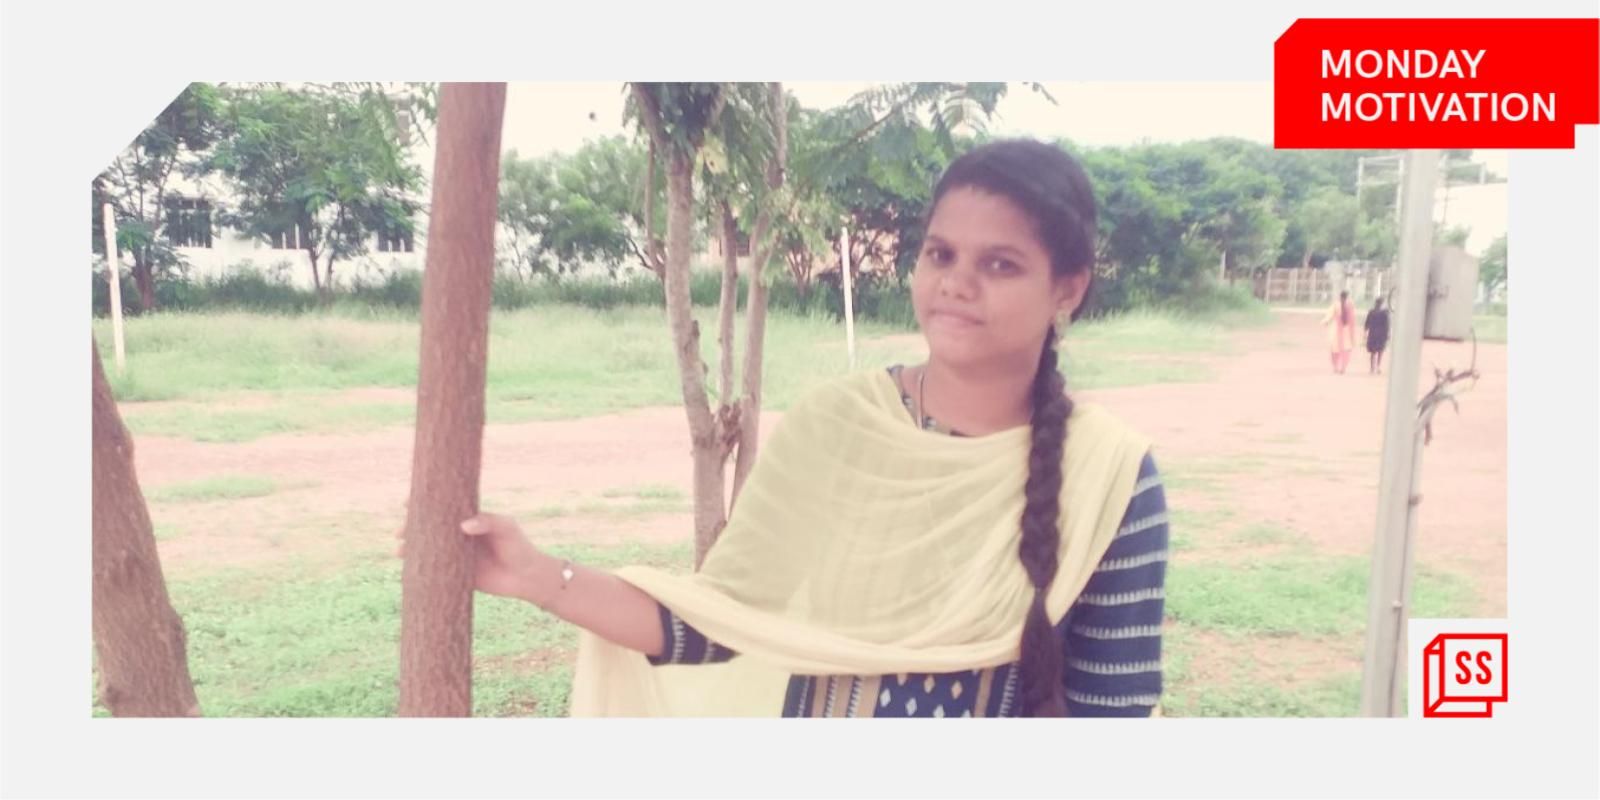 [Monday Motivation] Meet Gunasundari, a small-town girl from Tamil Nadu who coded her way to success